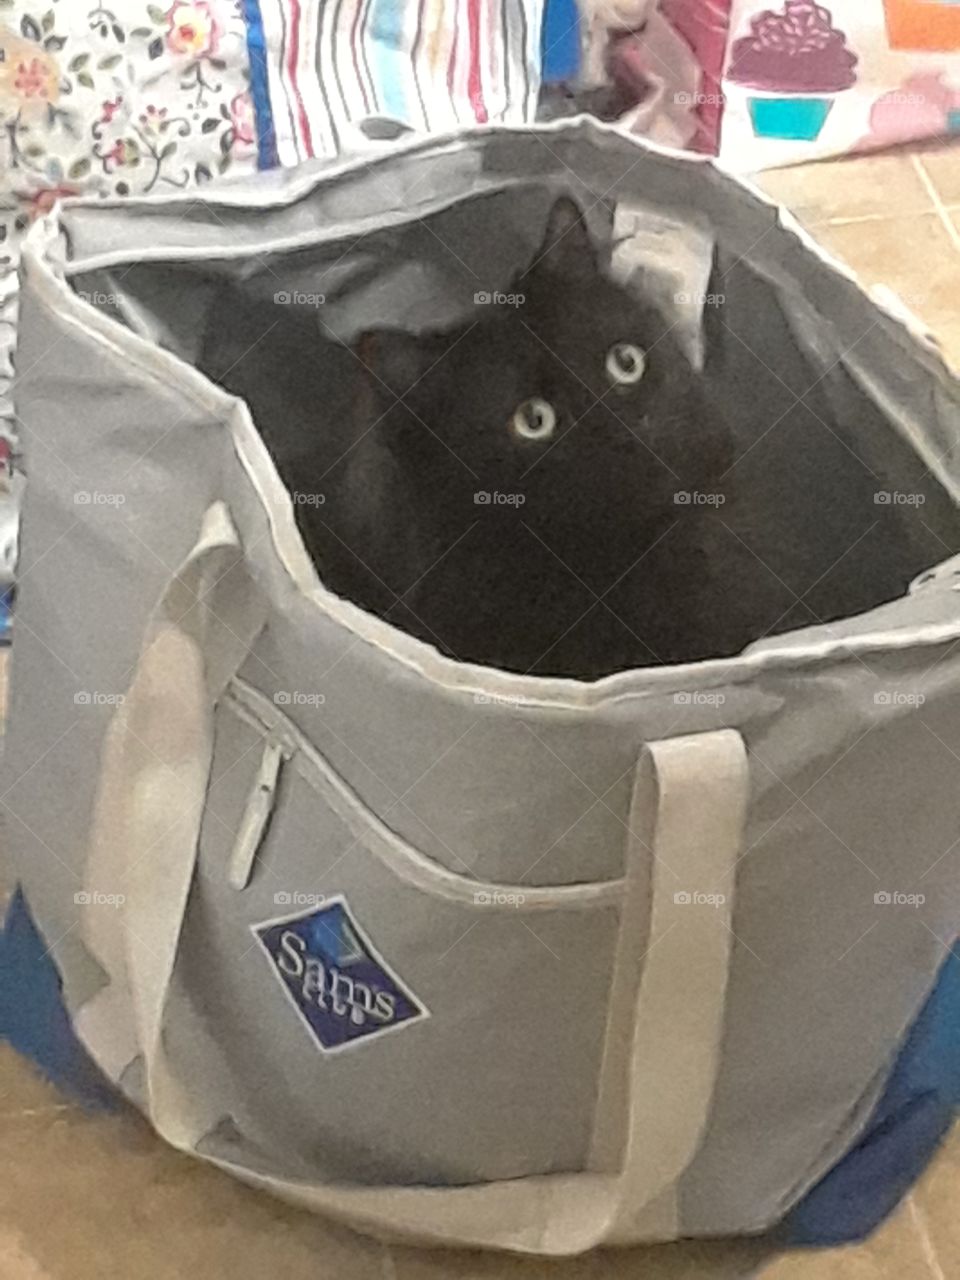 cat in the bag...